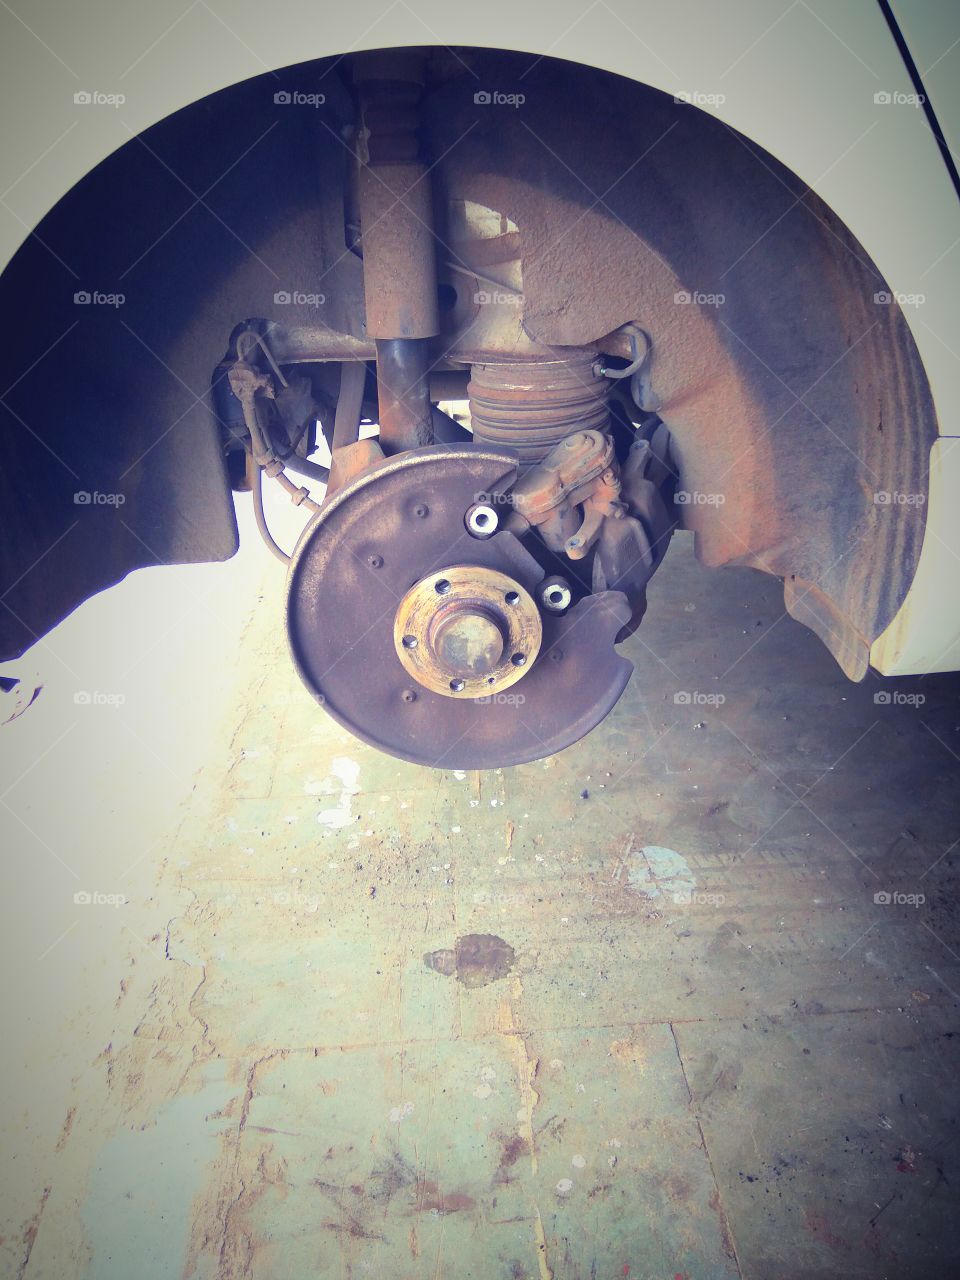 Audi brake pad replacement. Car maintenance process. Garage white color audi a6